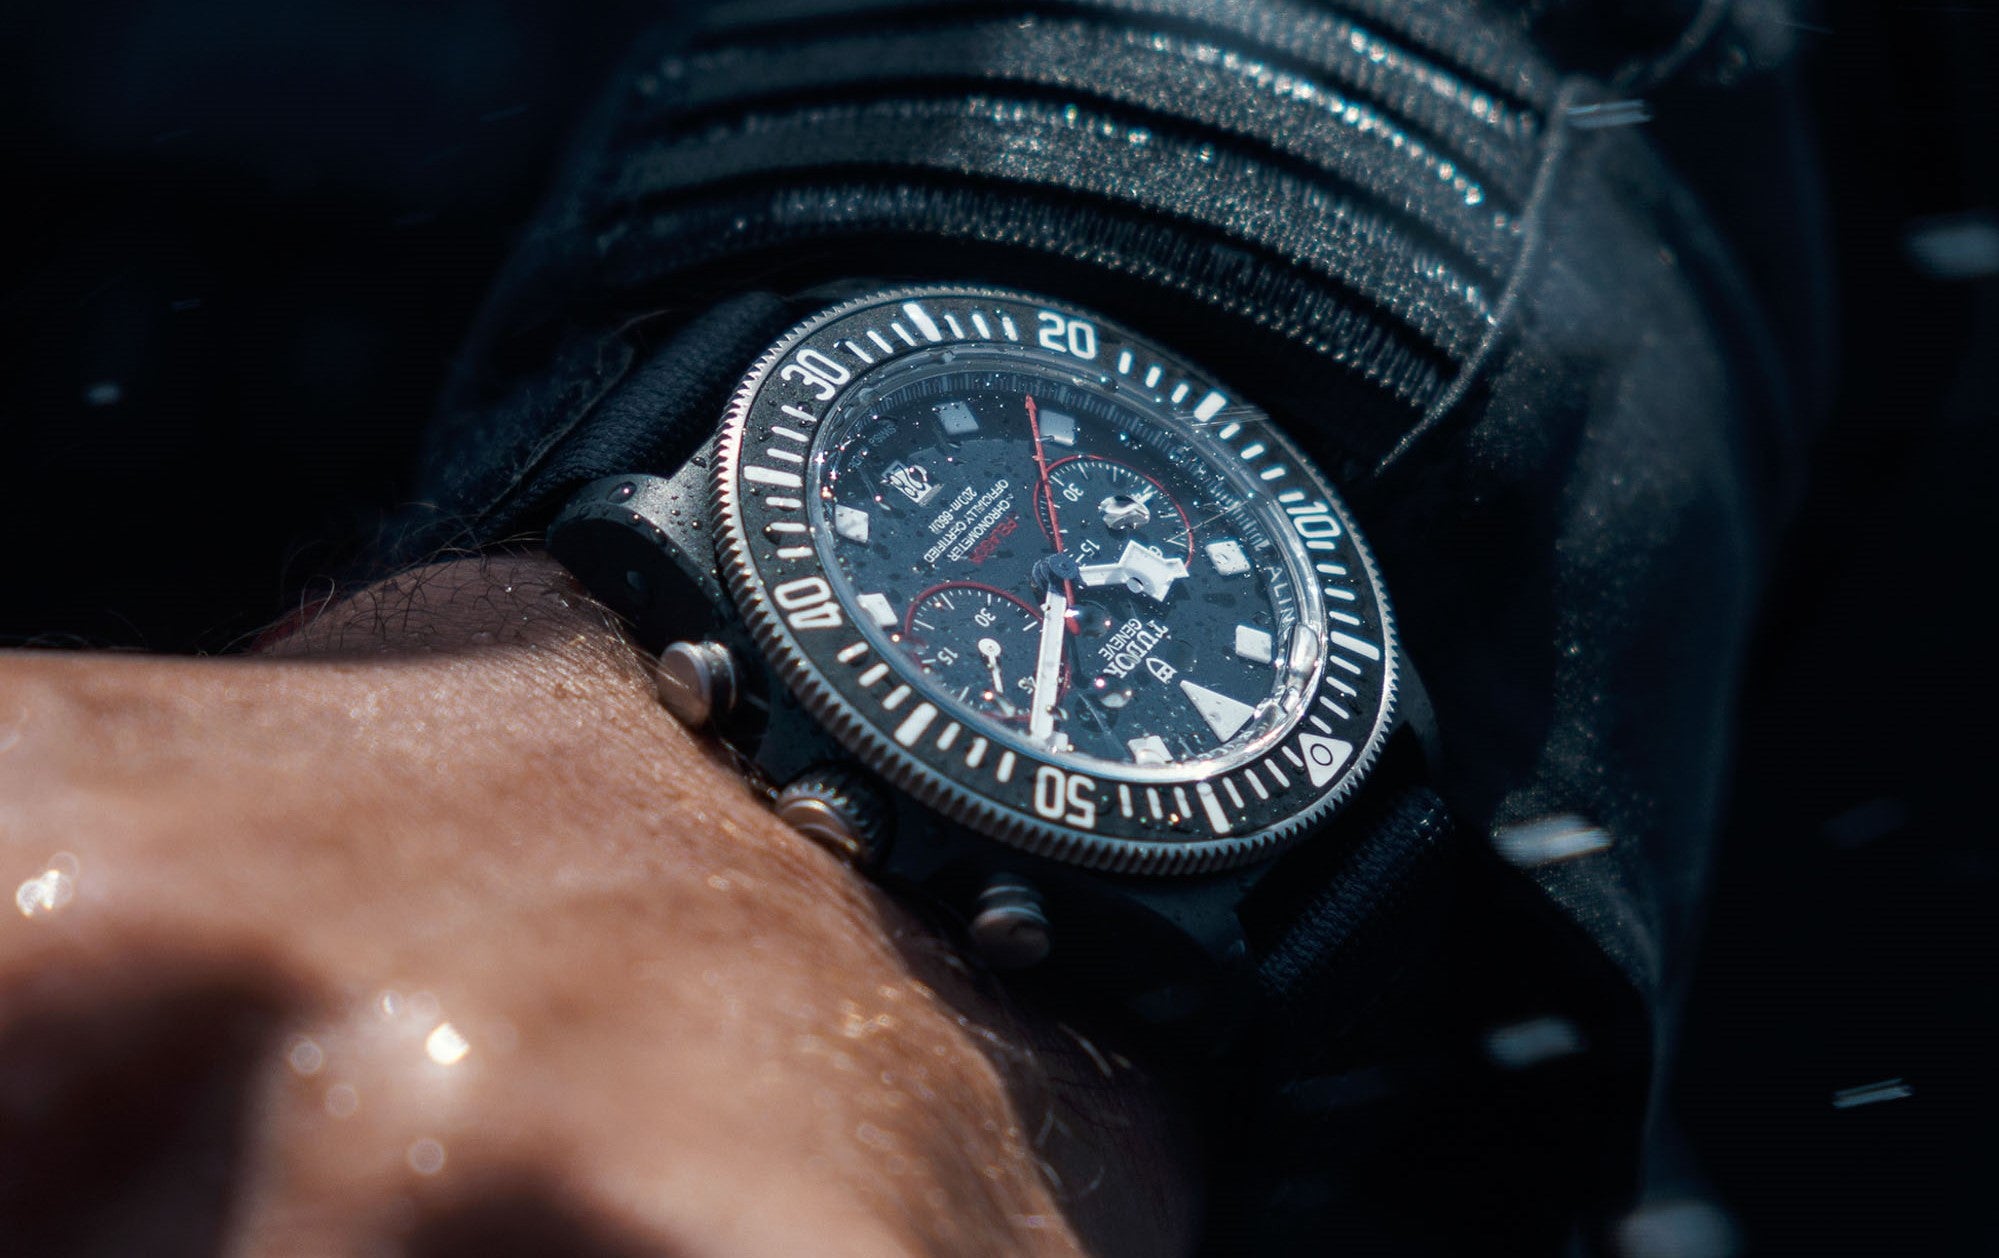 Tudor Pelagos FXD Alinghi Red Bull Racing chronograph on wrist 